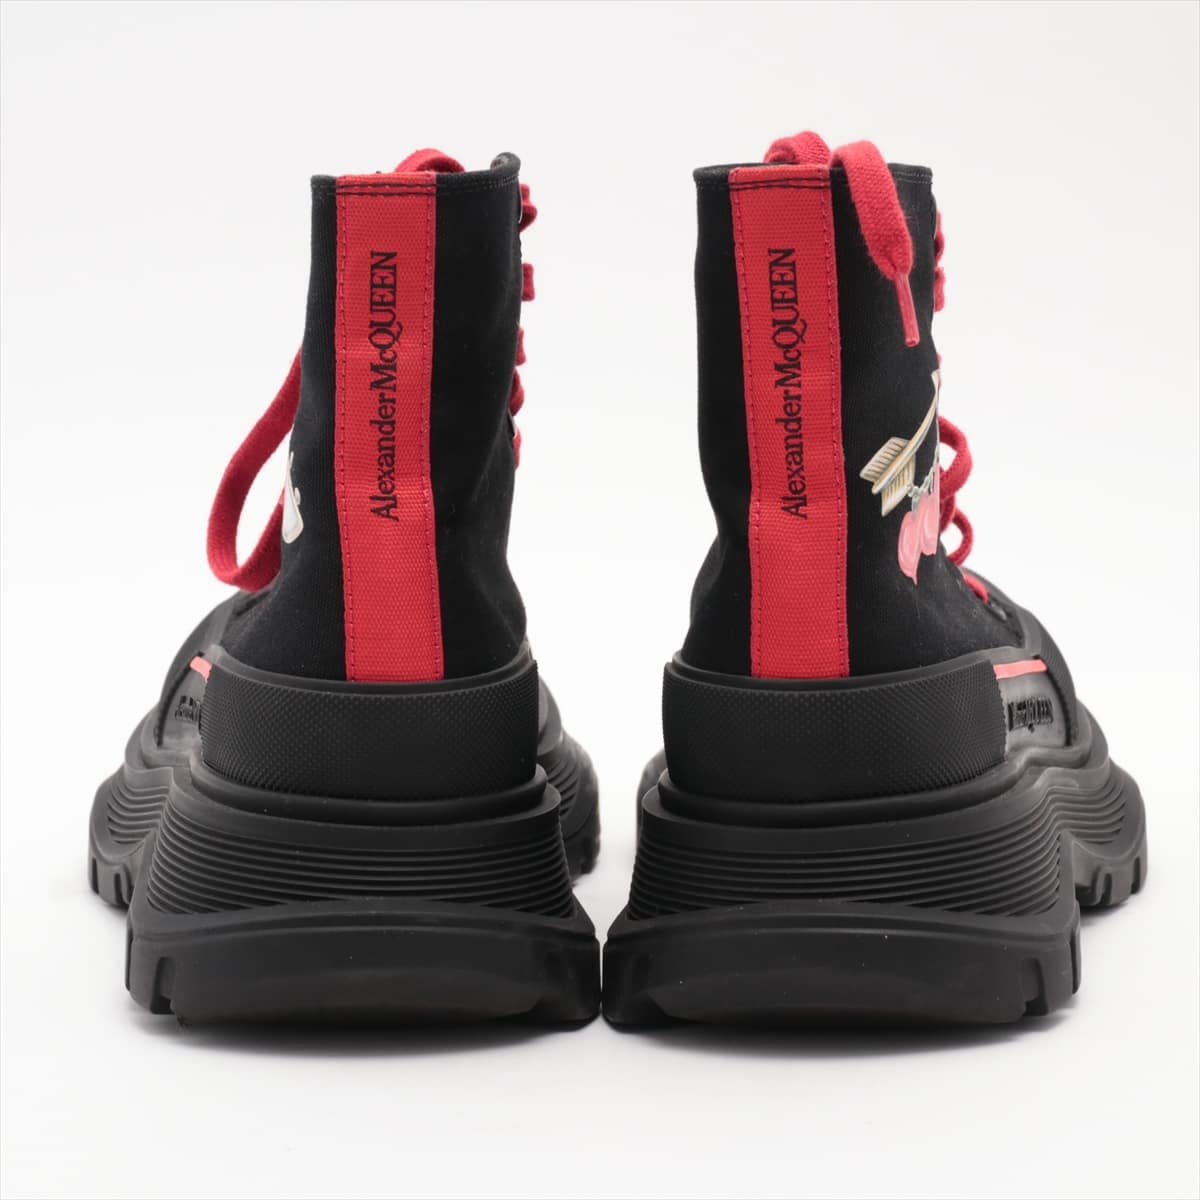 Alexander McQueen 21 years canvas Boots 35 Ladies' Red x Black tread slick TREAD SLICK Valentine capsule collection